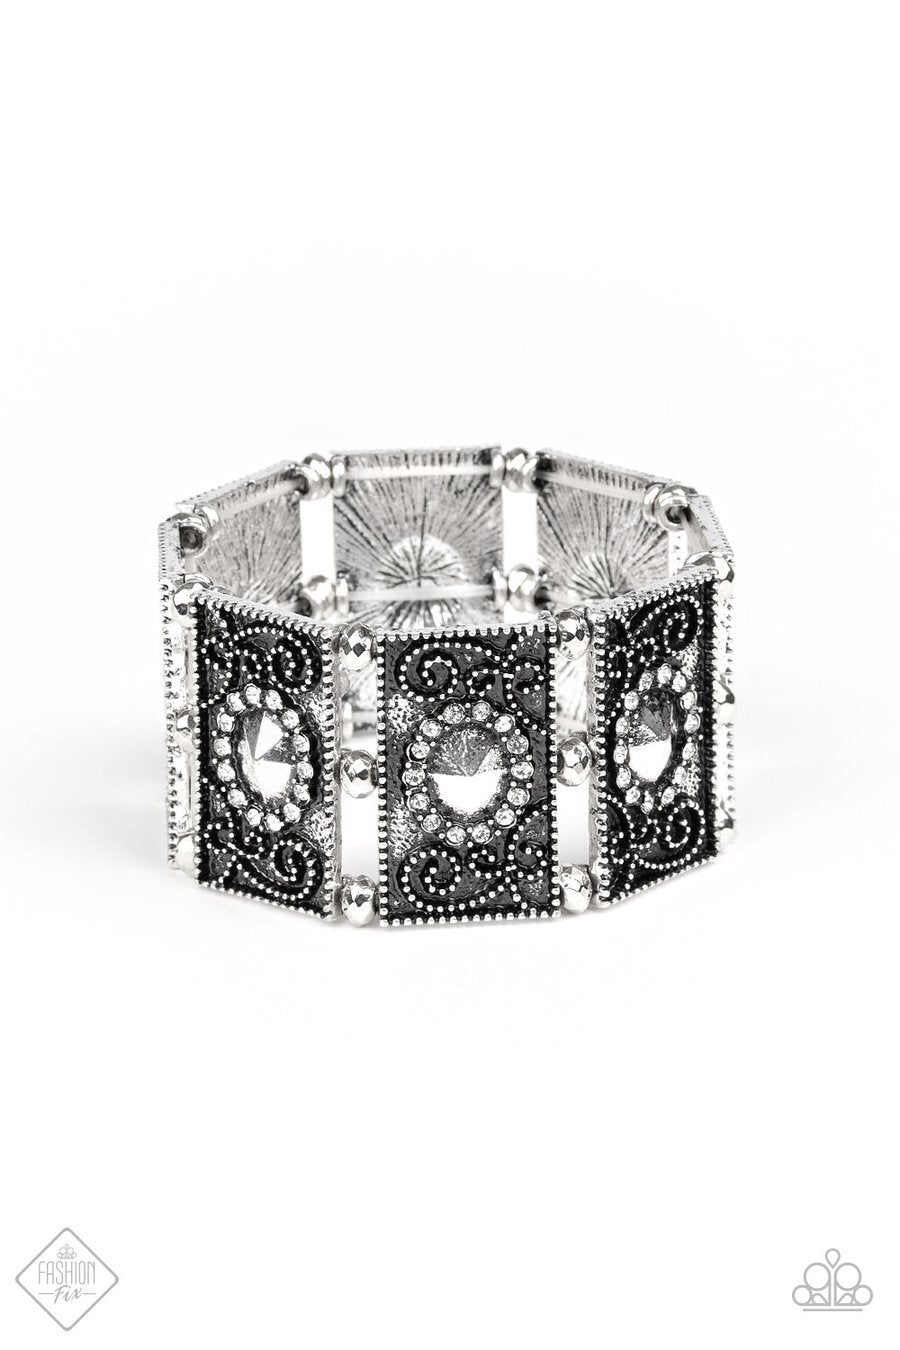 Paparazzi Accessories - Tycoon Texture -  #SS-1019 - Fashion Fix White Bracelet October 2019